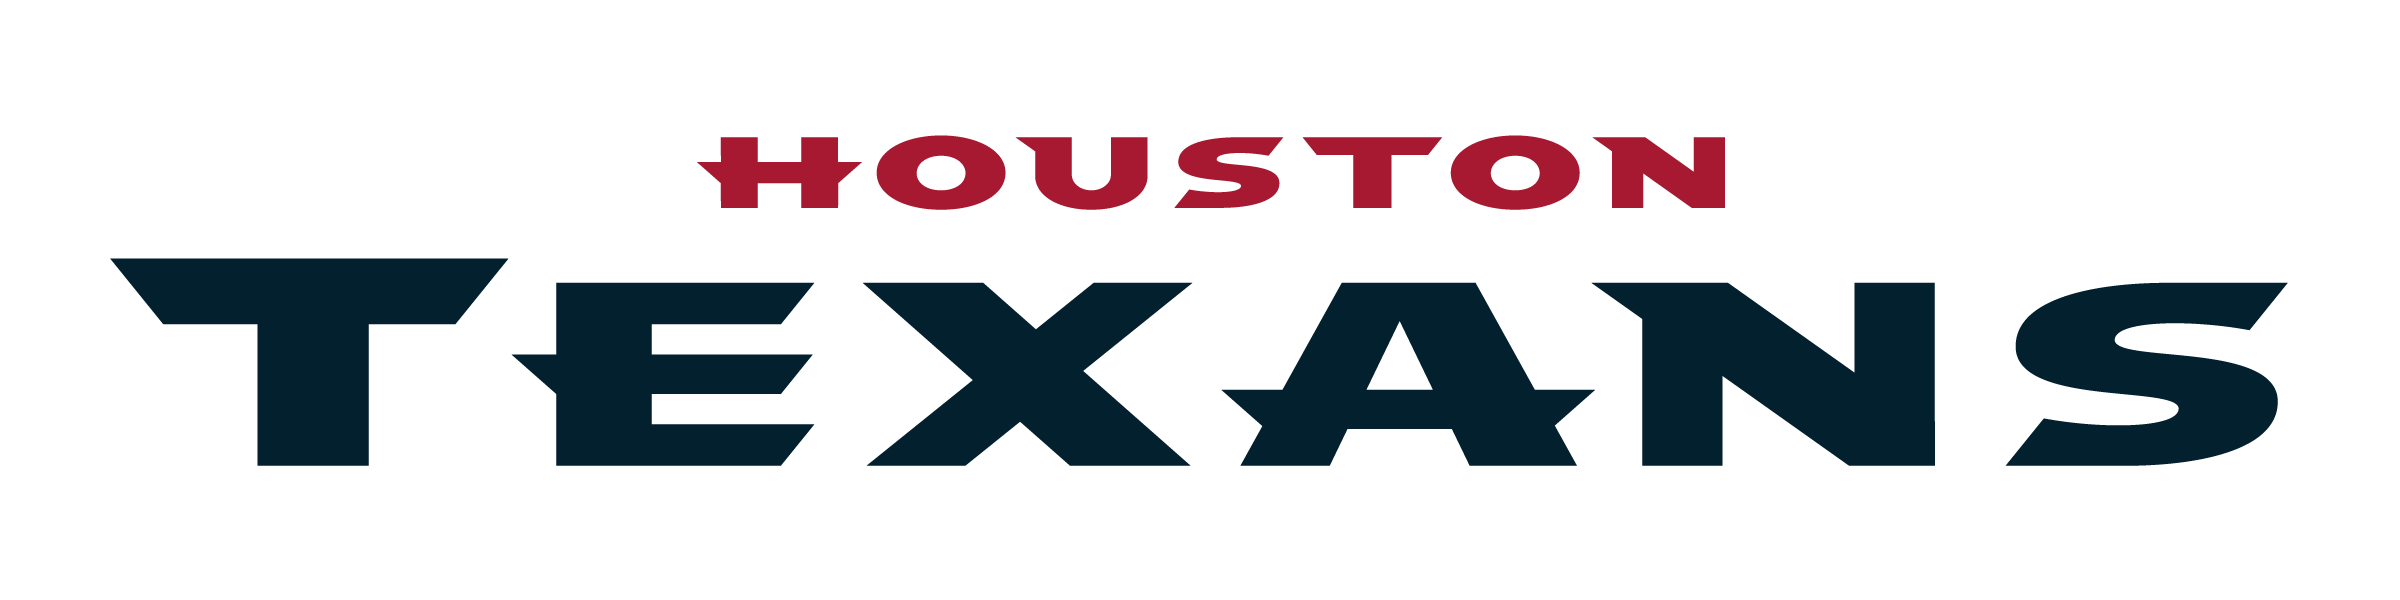 Houston Texans Logo - Houston Texans Logo PNG Transparent & SVG Vector - Freebie Supply